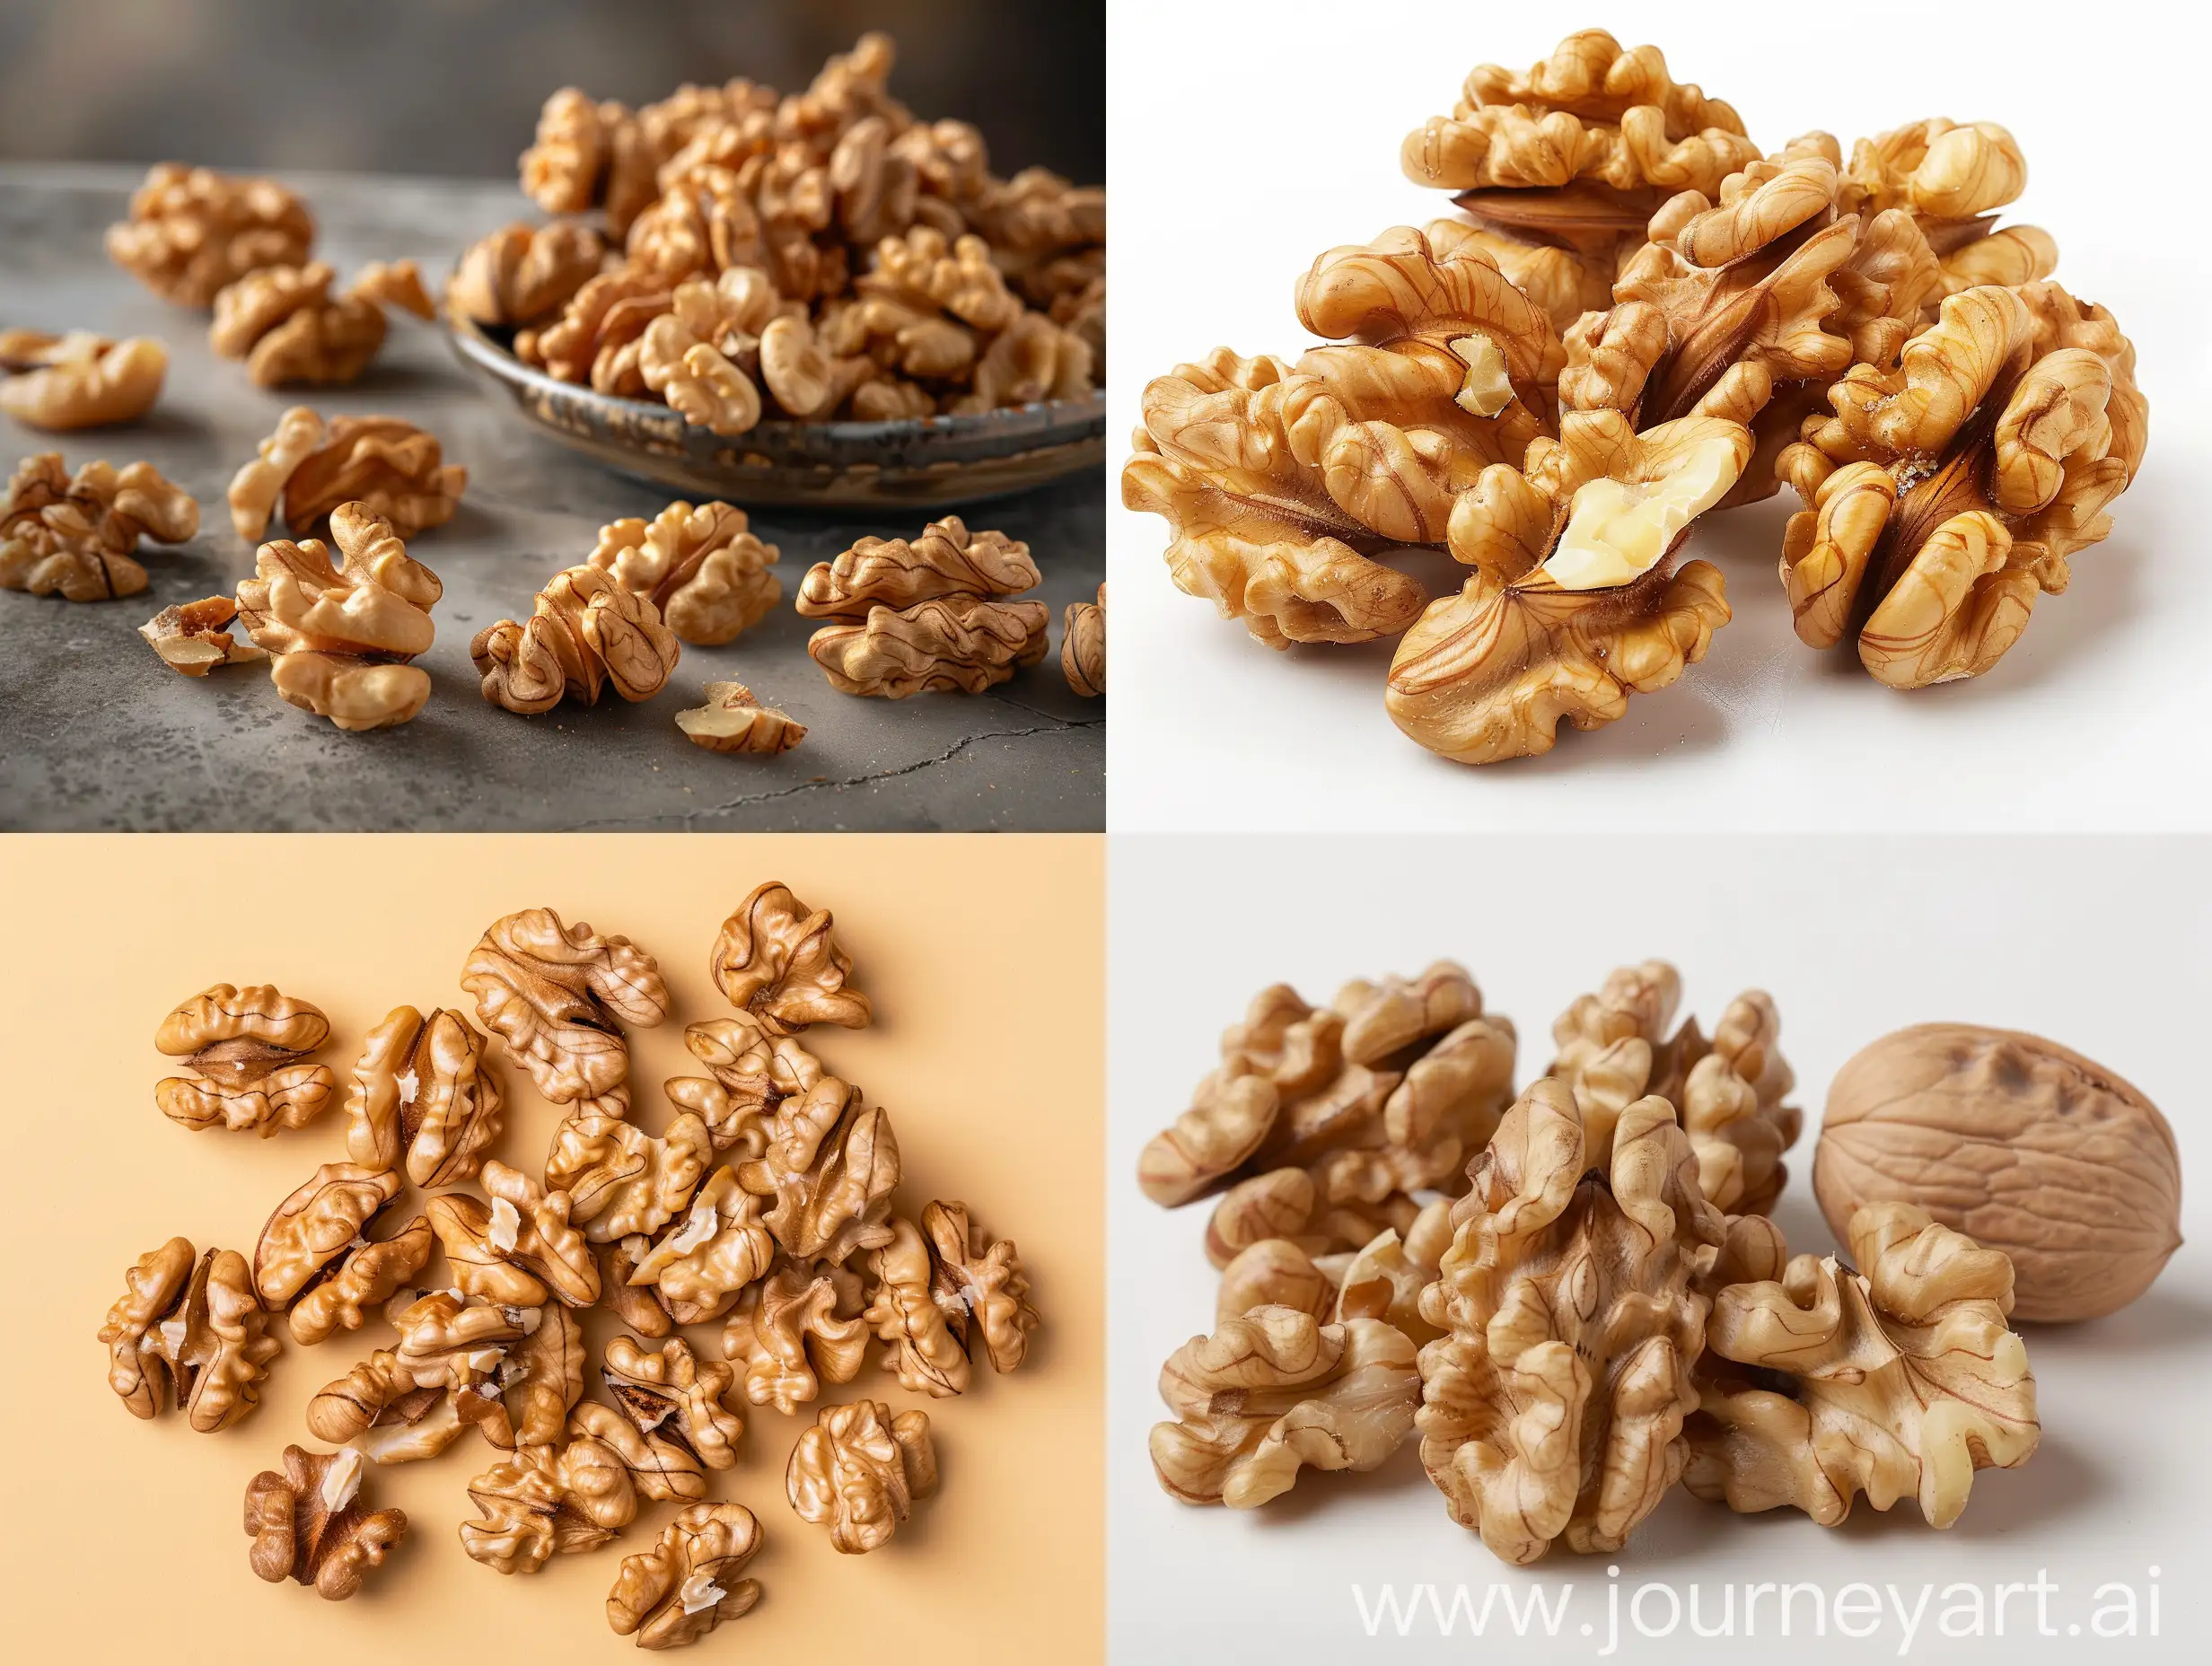 Studio photography of walnut kernels